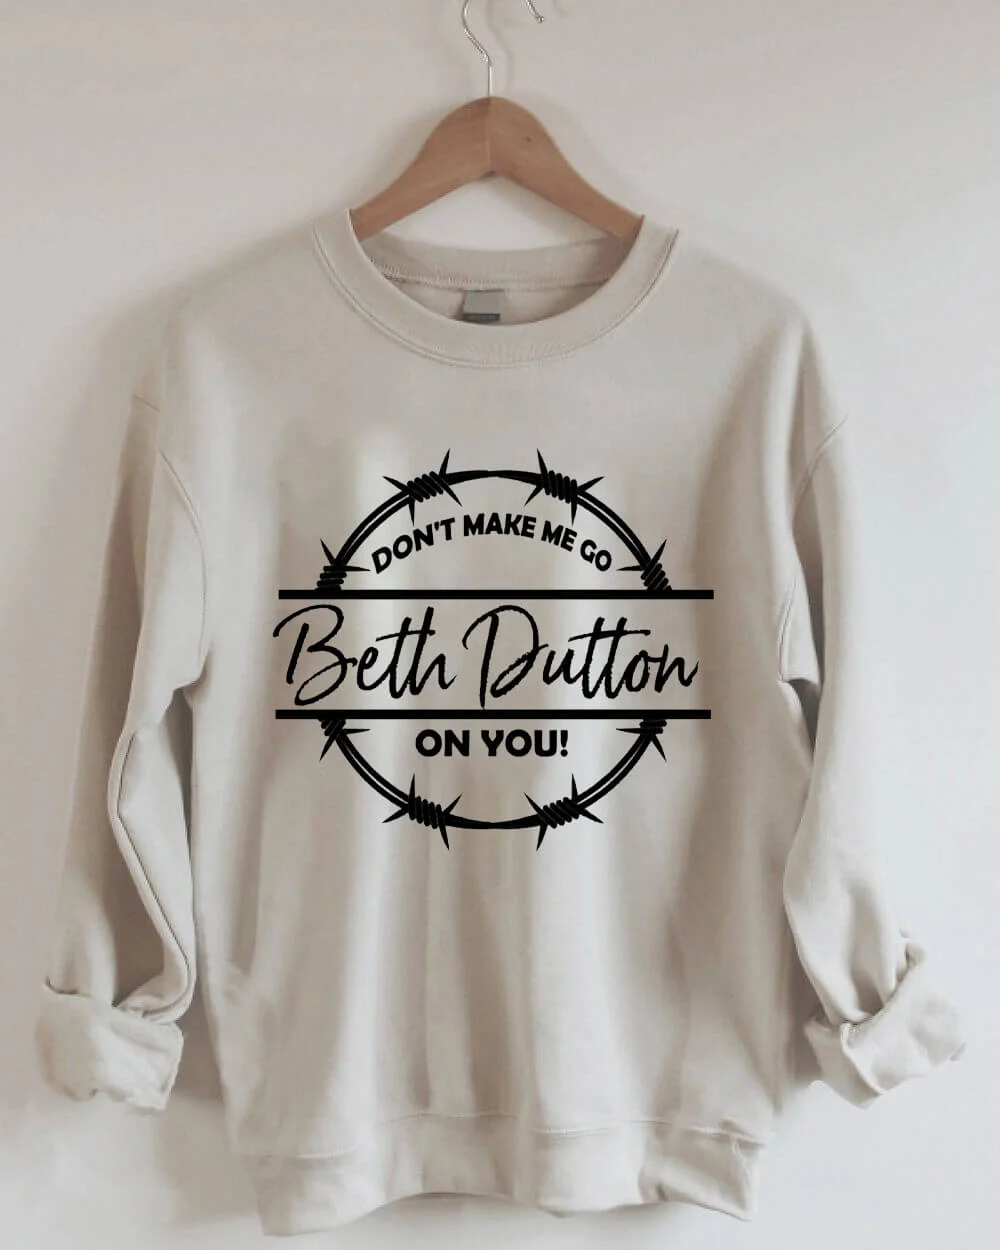 Don't Make Me Go Beth Dutton On You Sweatshirt